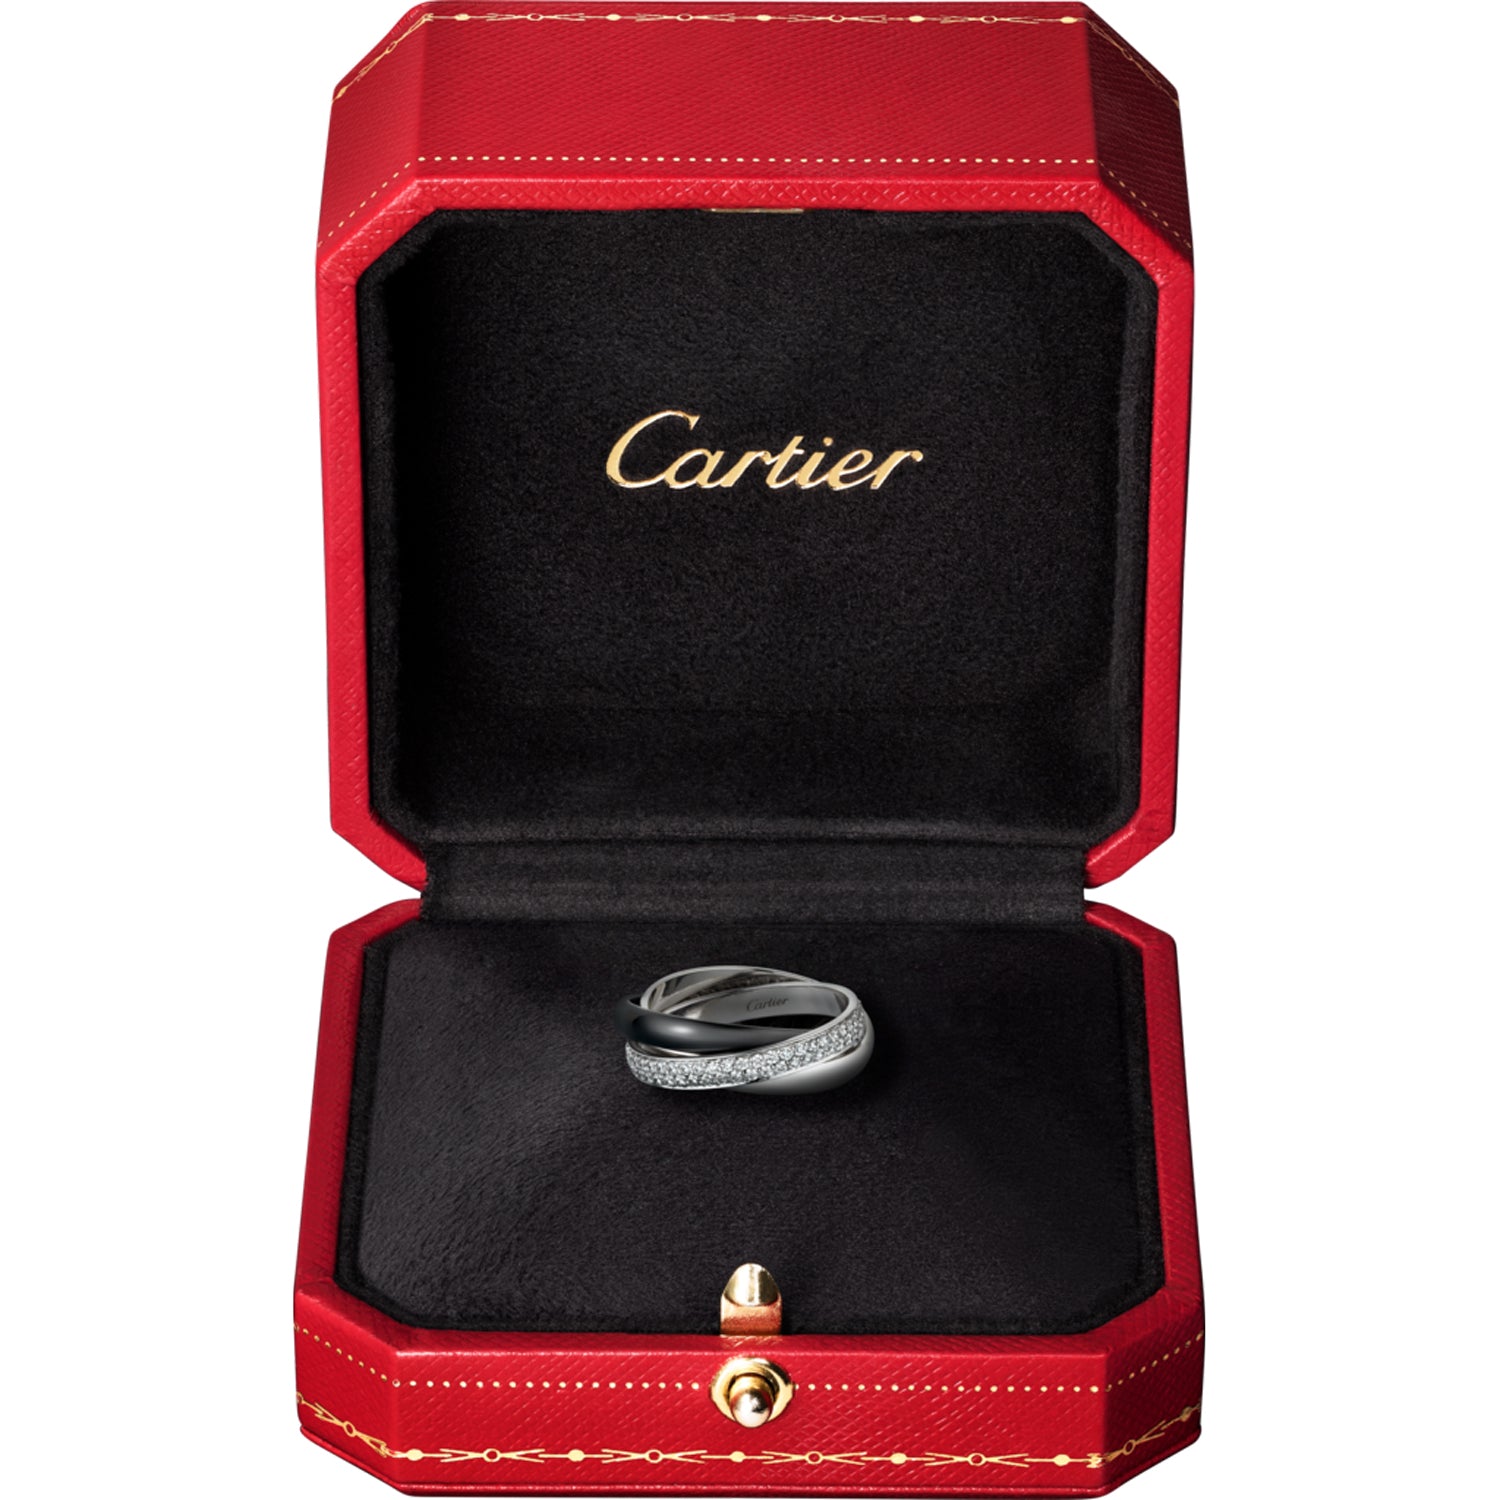 CRB4234100 - Classic Trinity ring in ceramic - White gold, ceramic - Cartier